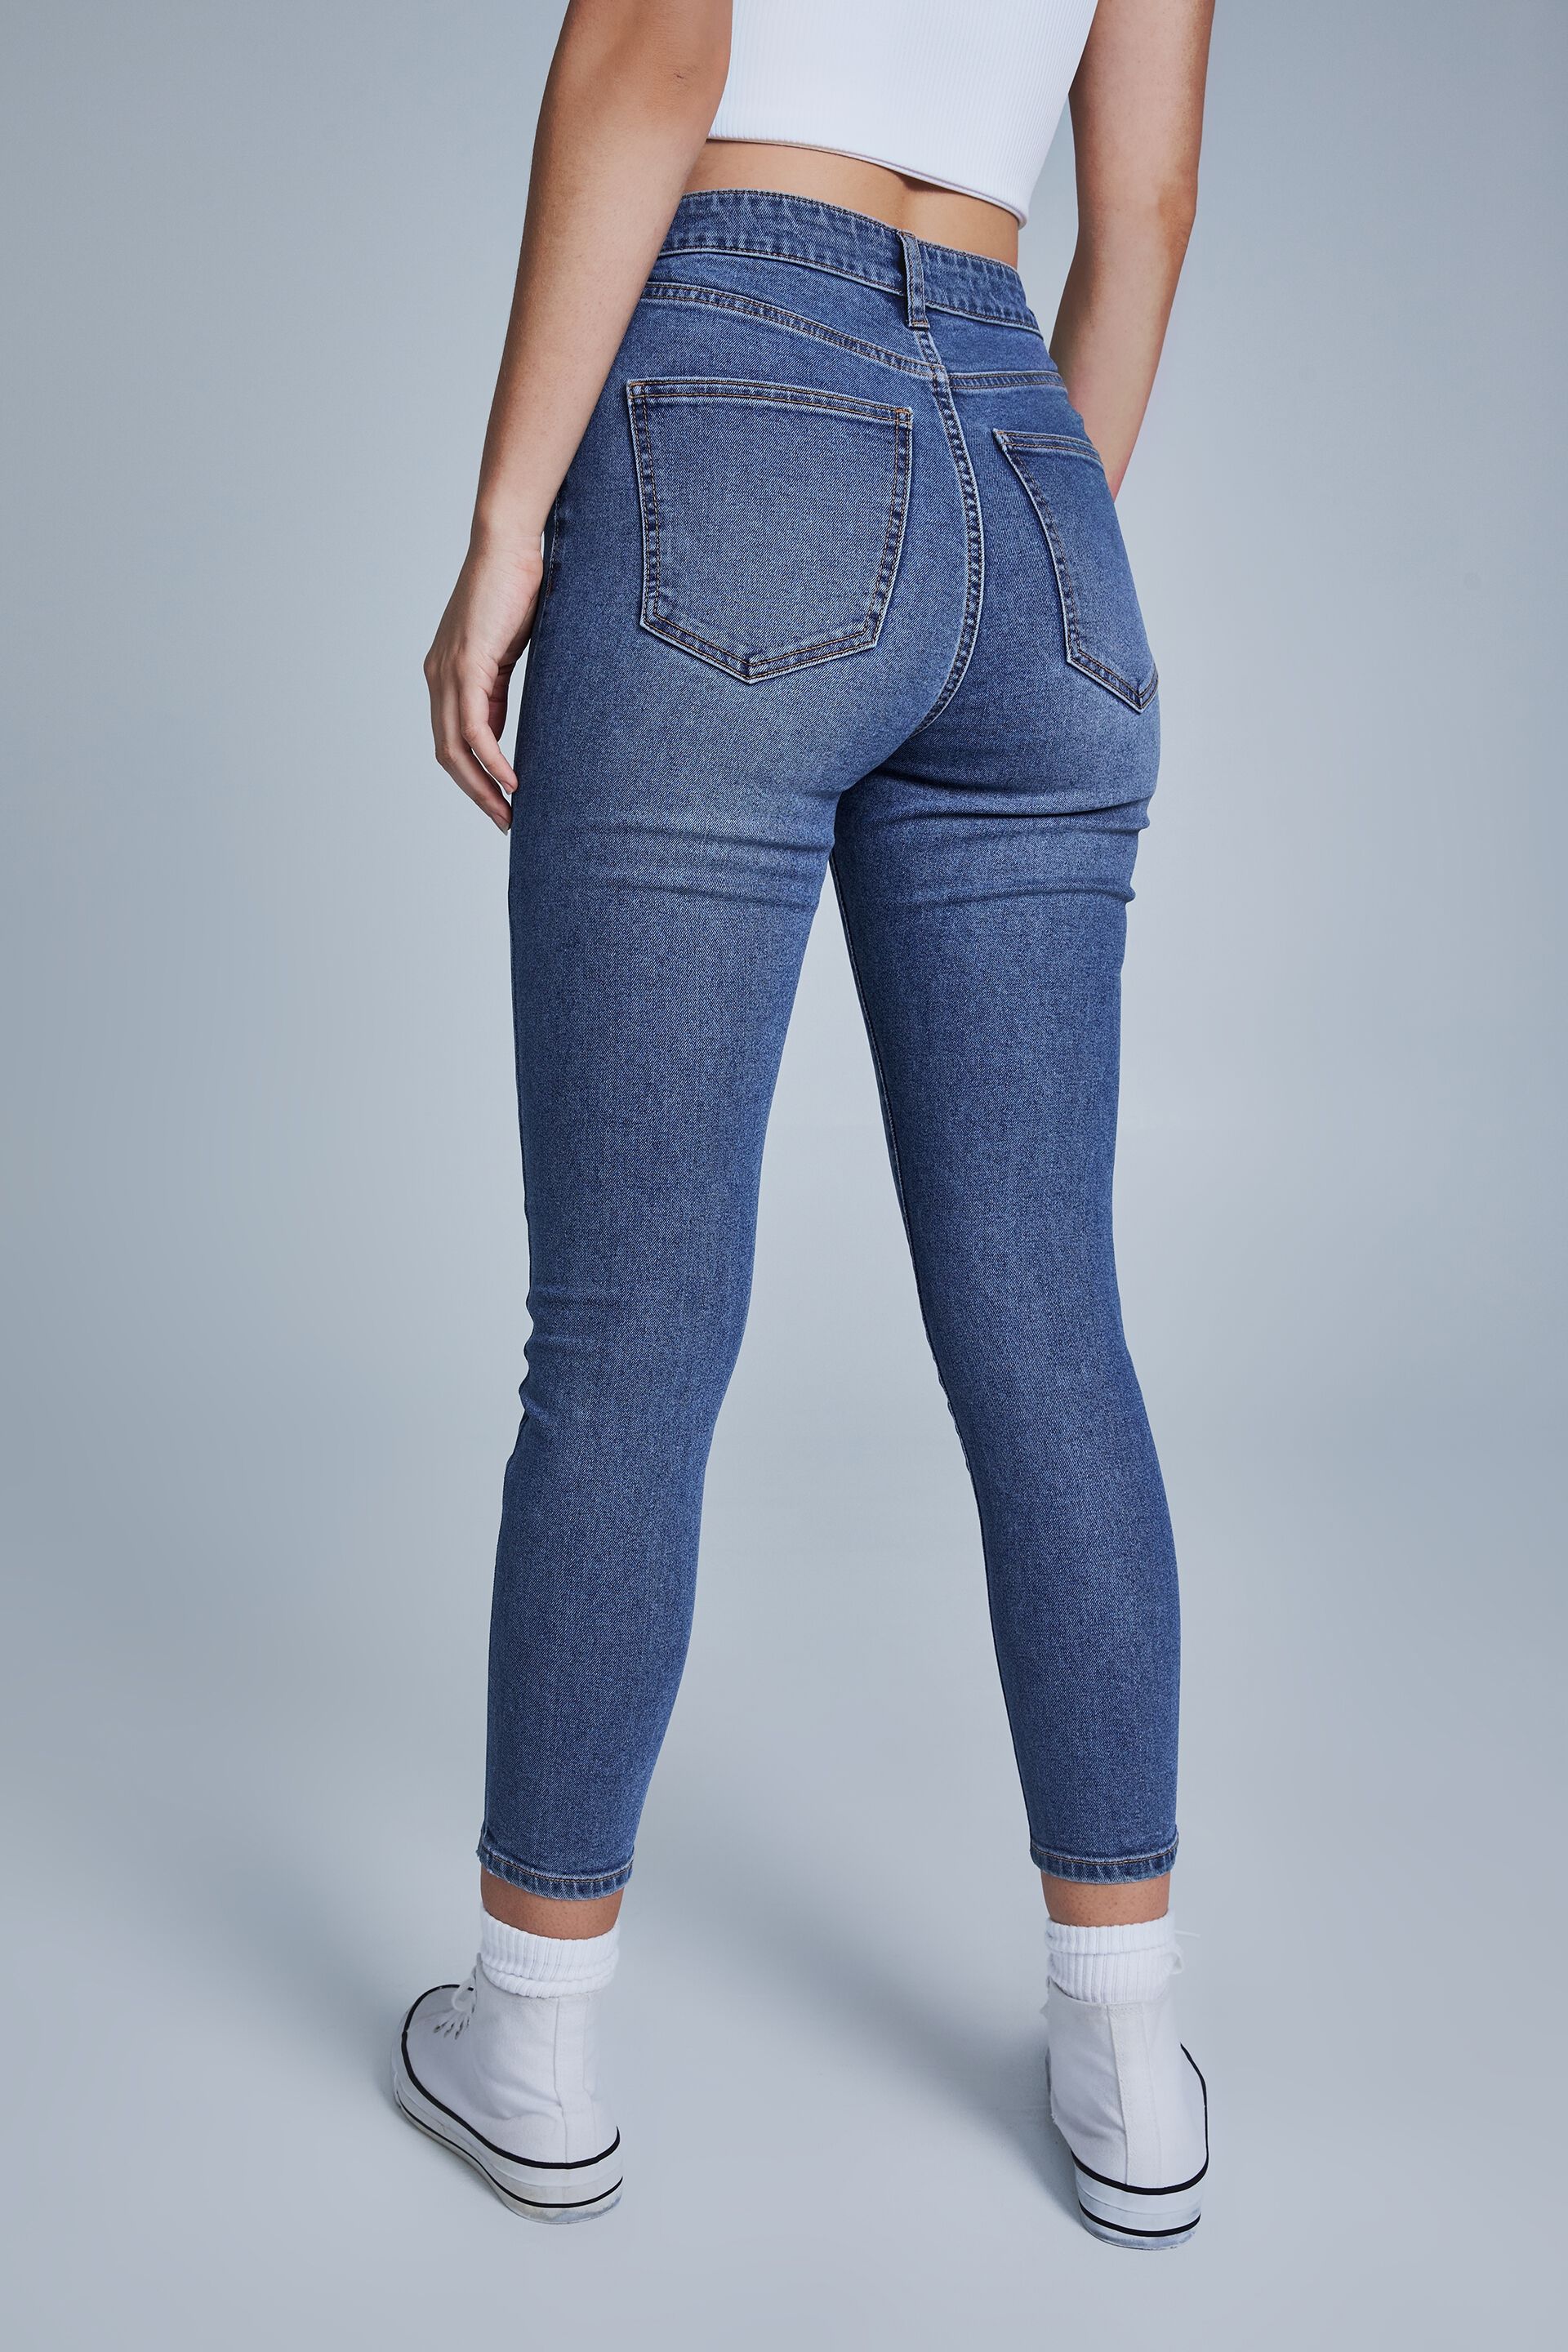 Vintage America Blues Womens Petite Seamless Body Positive Skinny Jean 